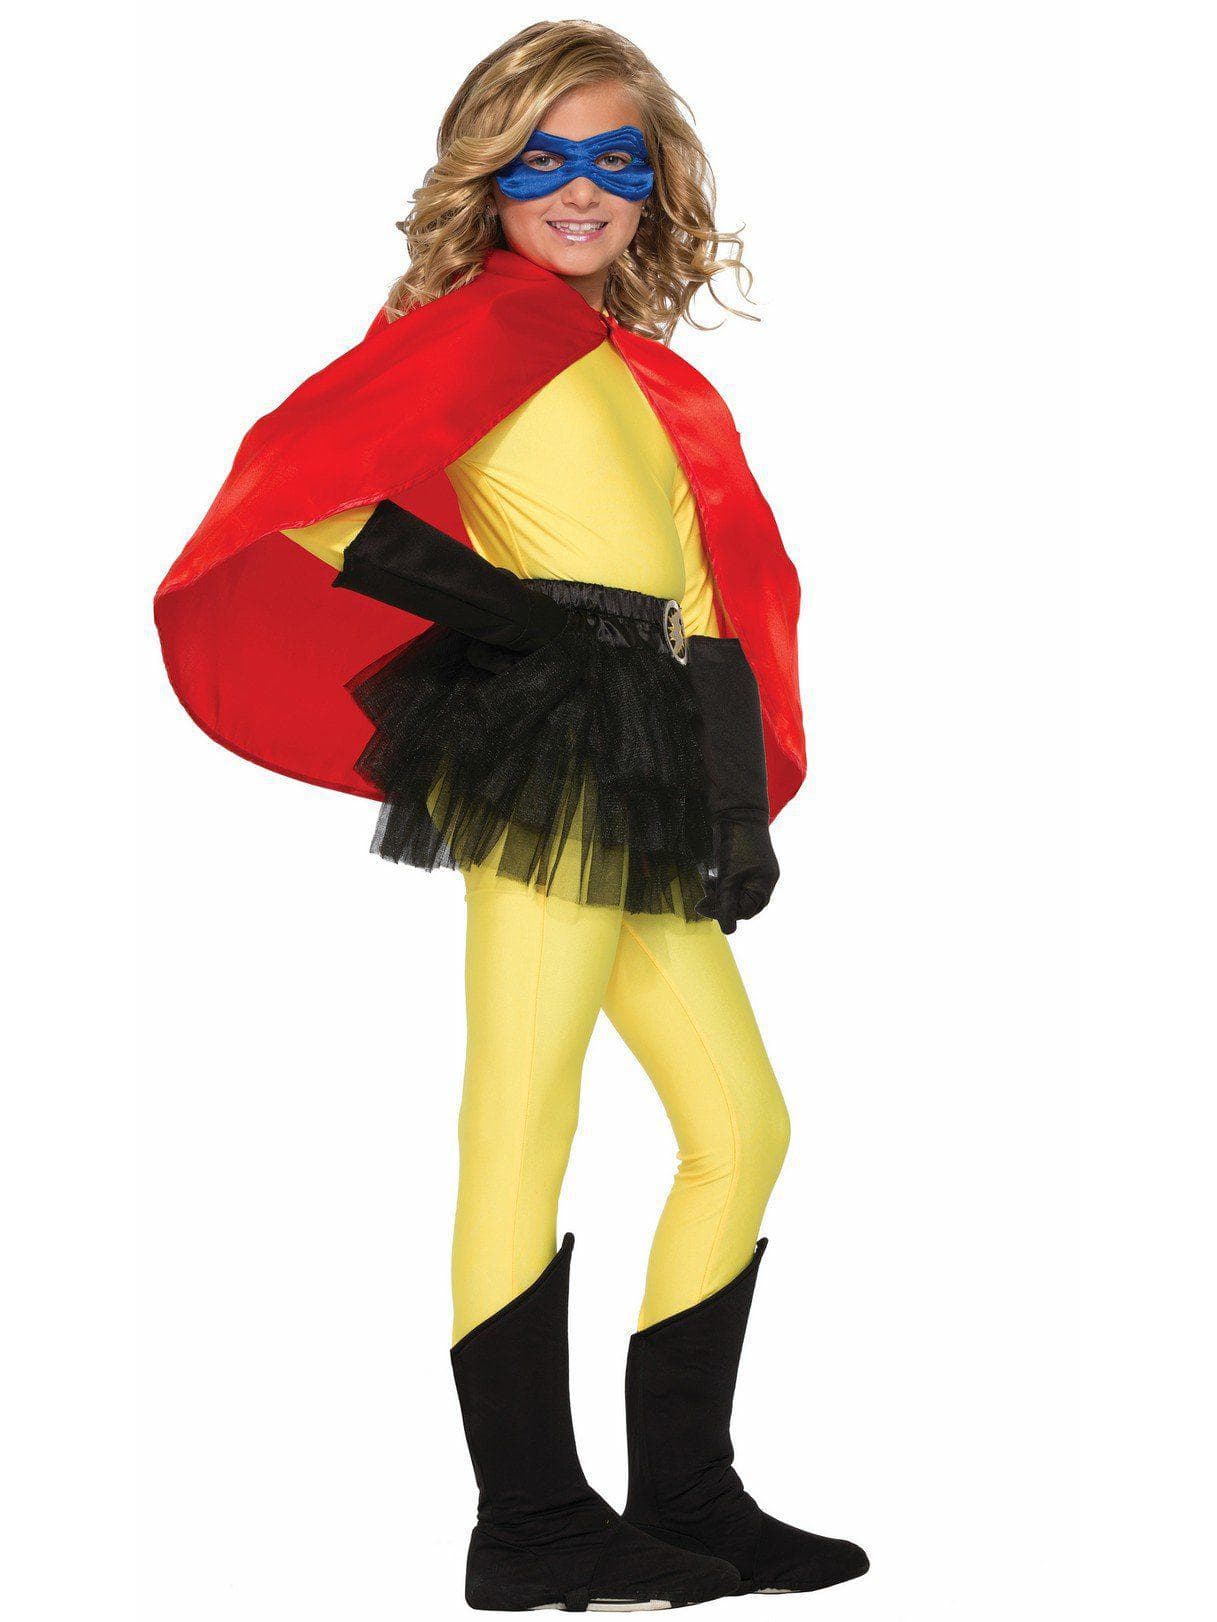 Kids' Red Satin Cape - costumes.com